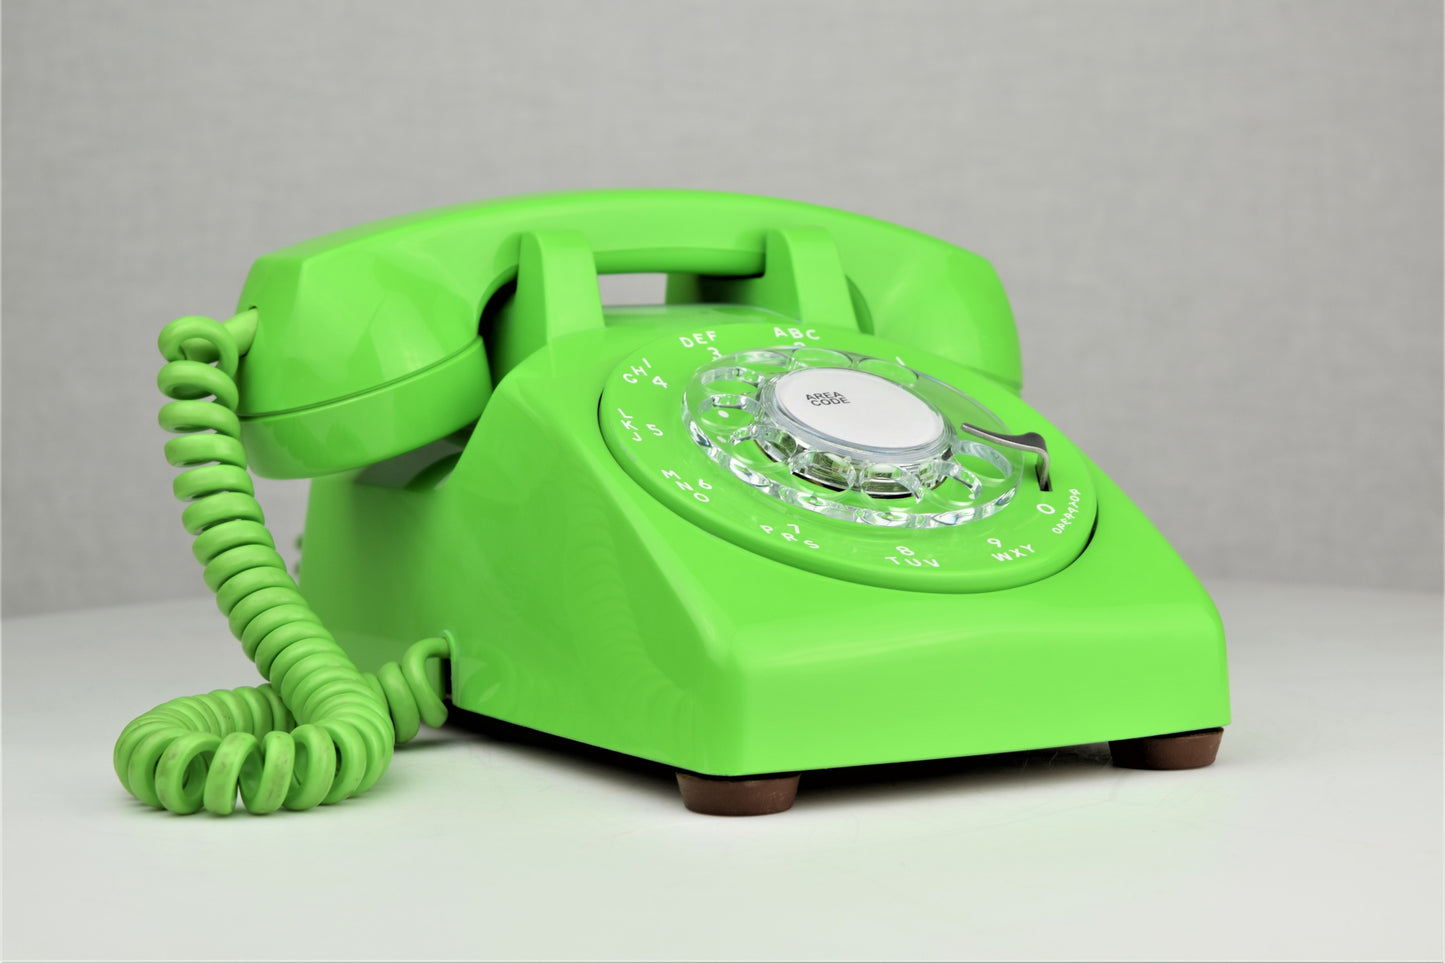 Green 500 series rotary telephone telephone